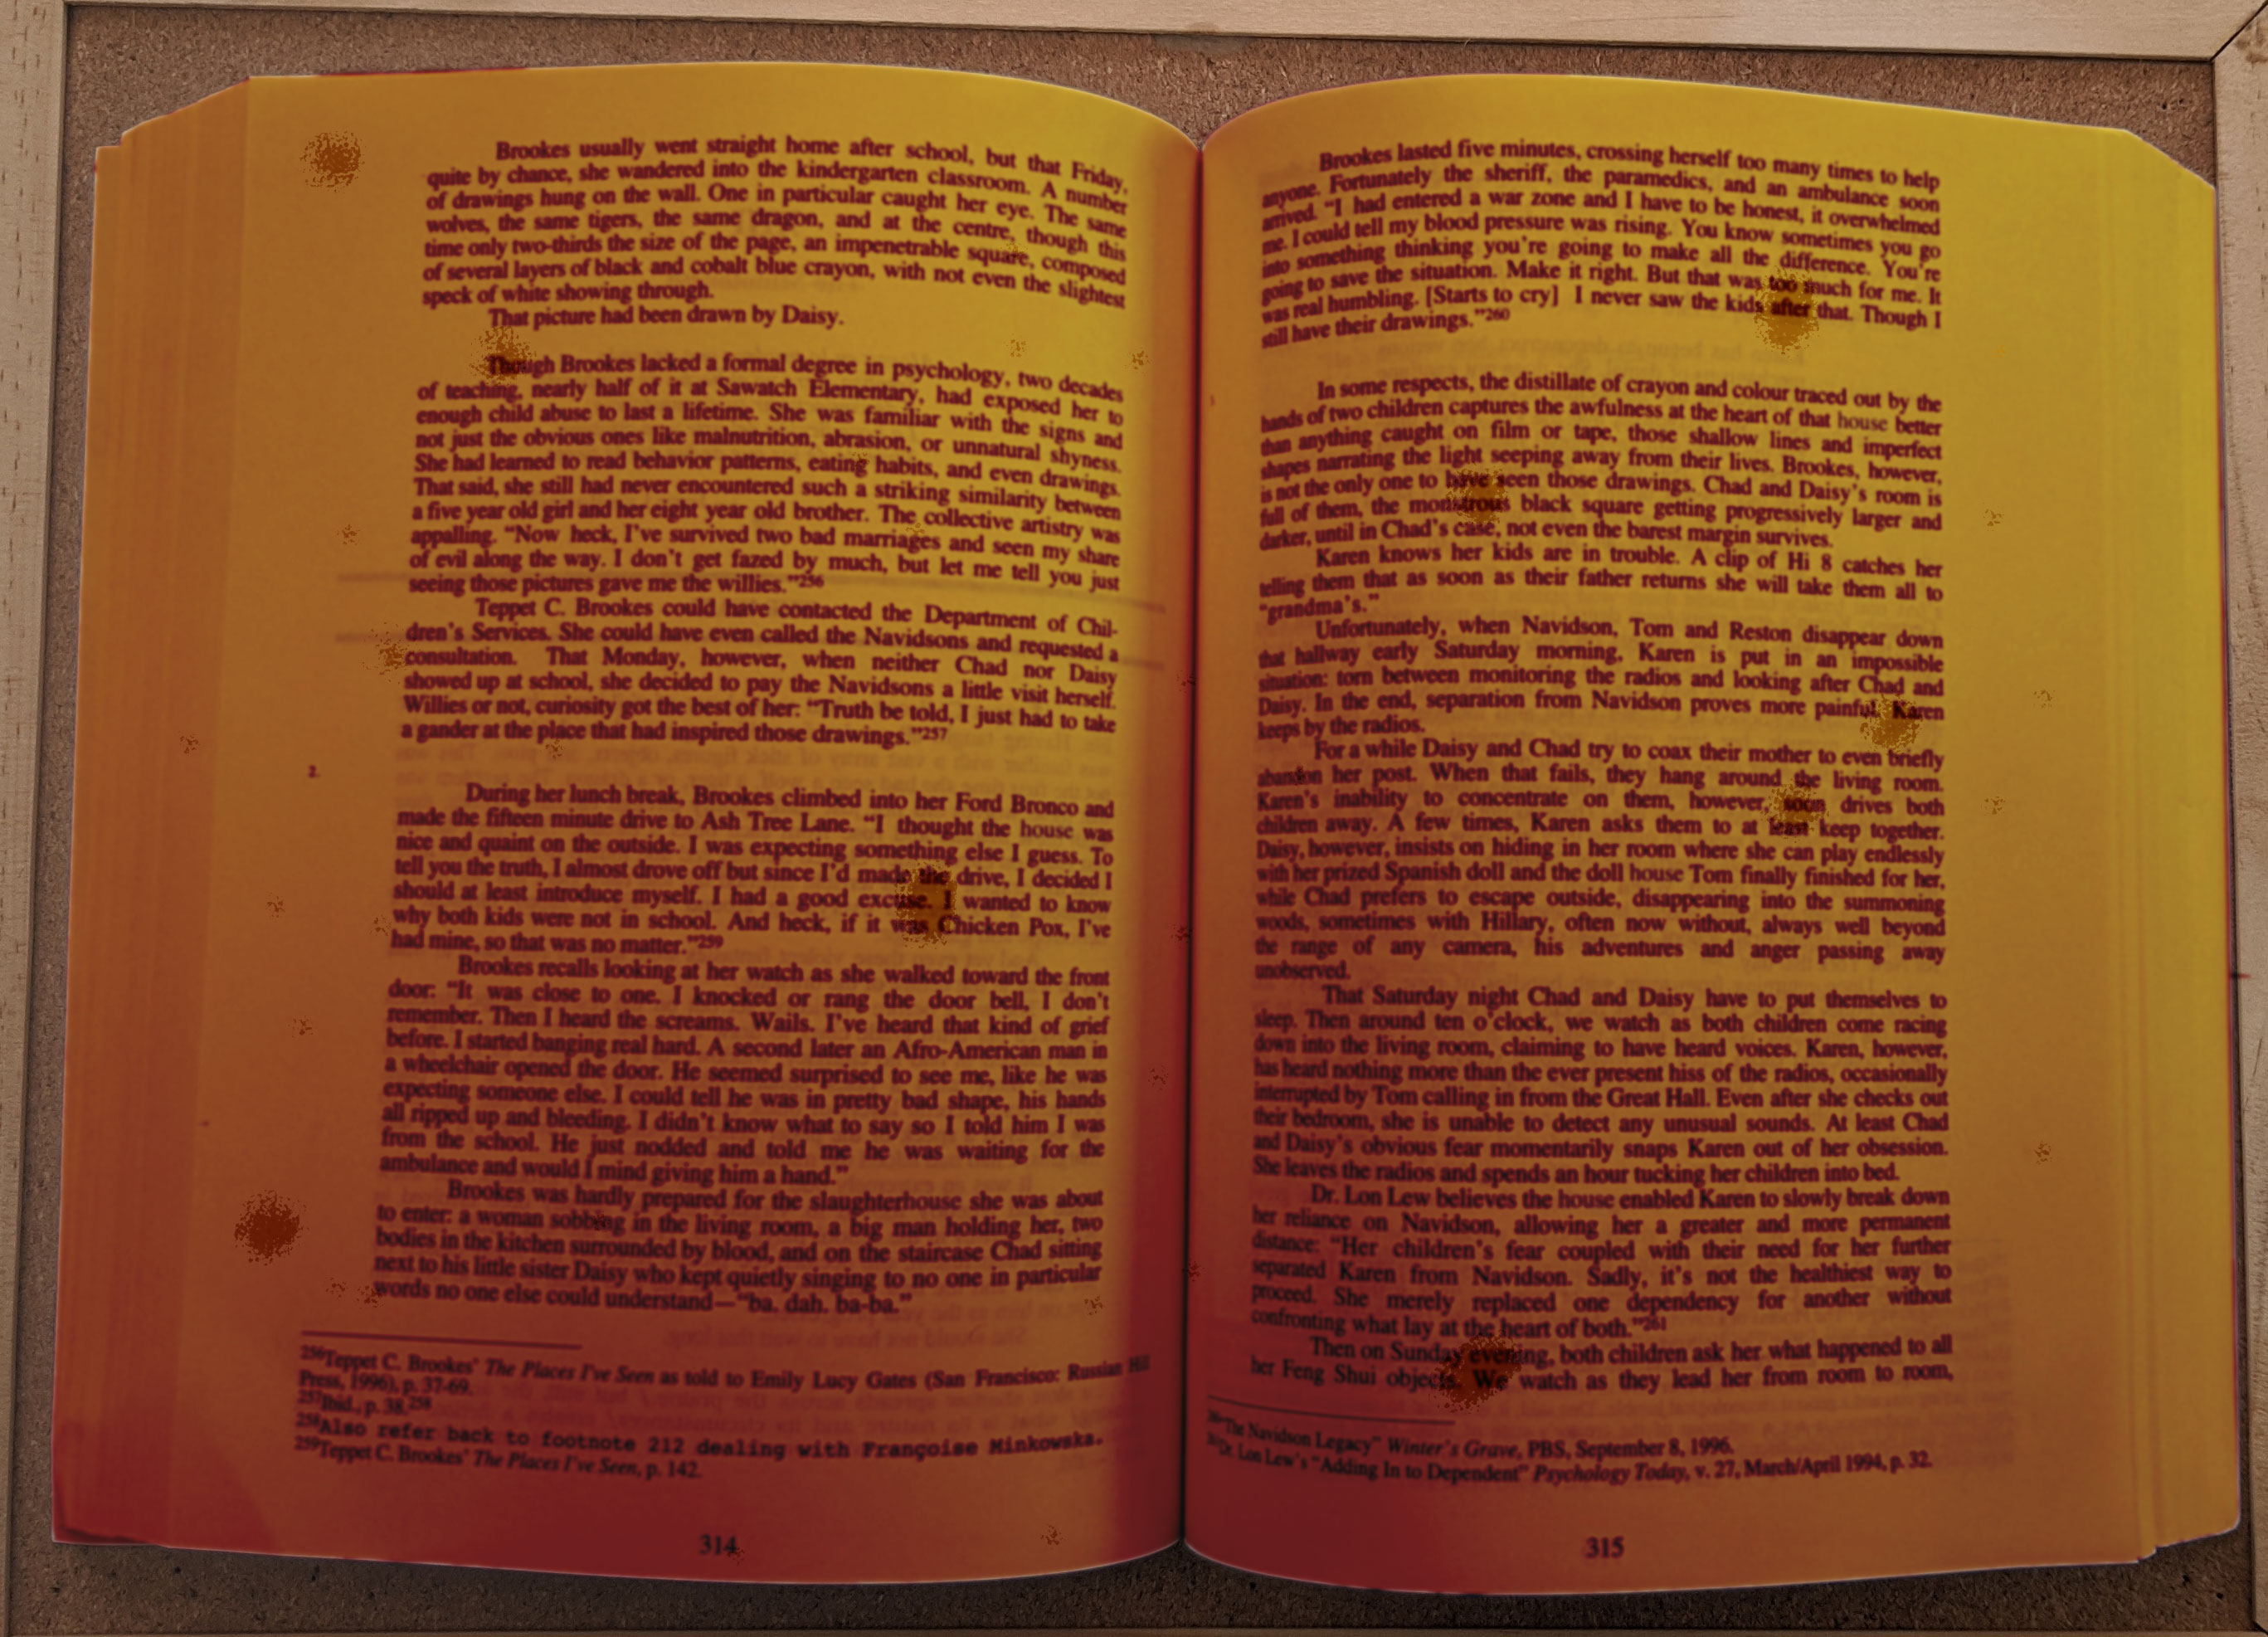 an old book describing the myth of Dandelion